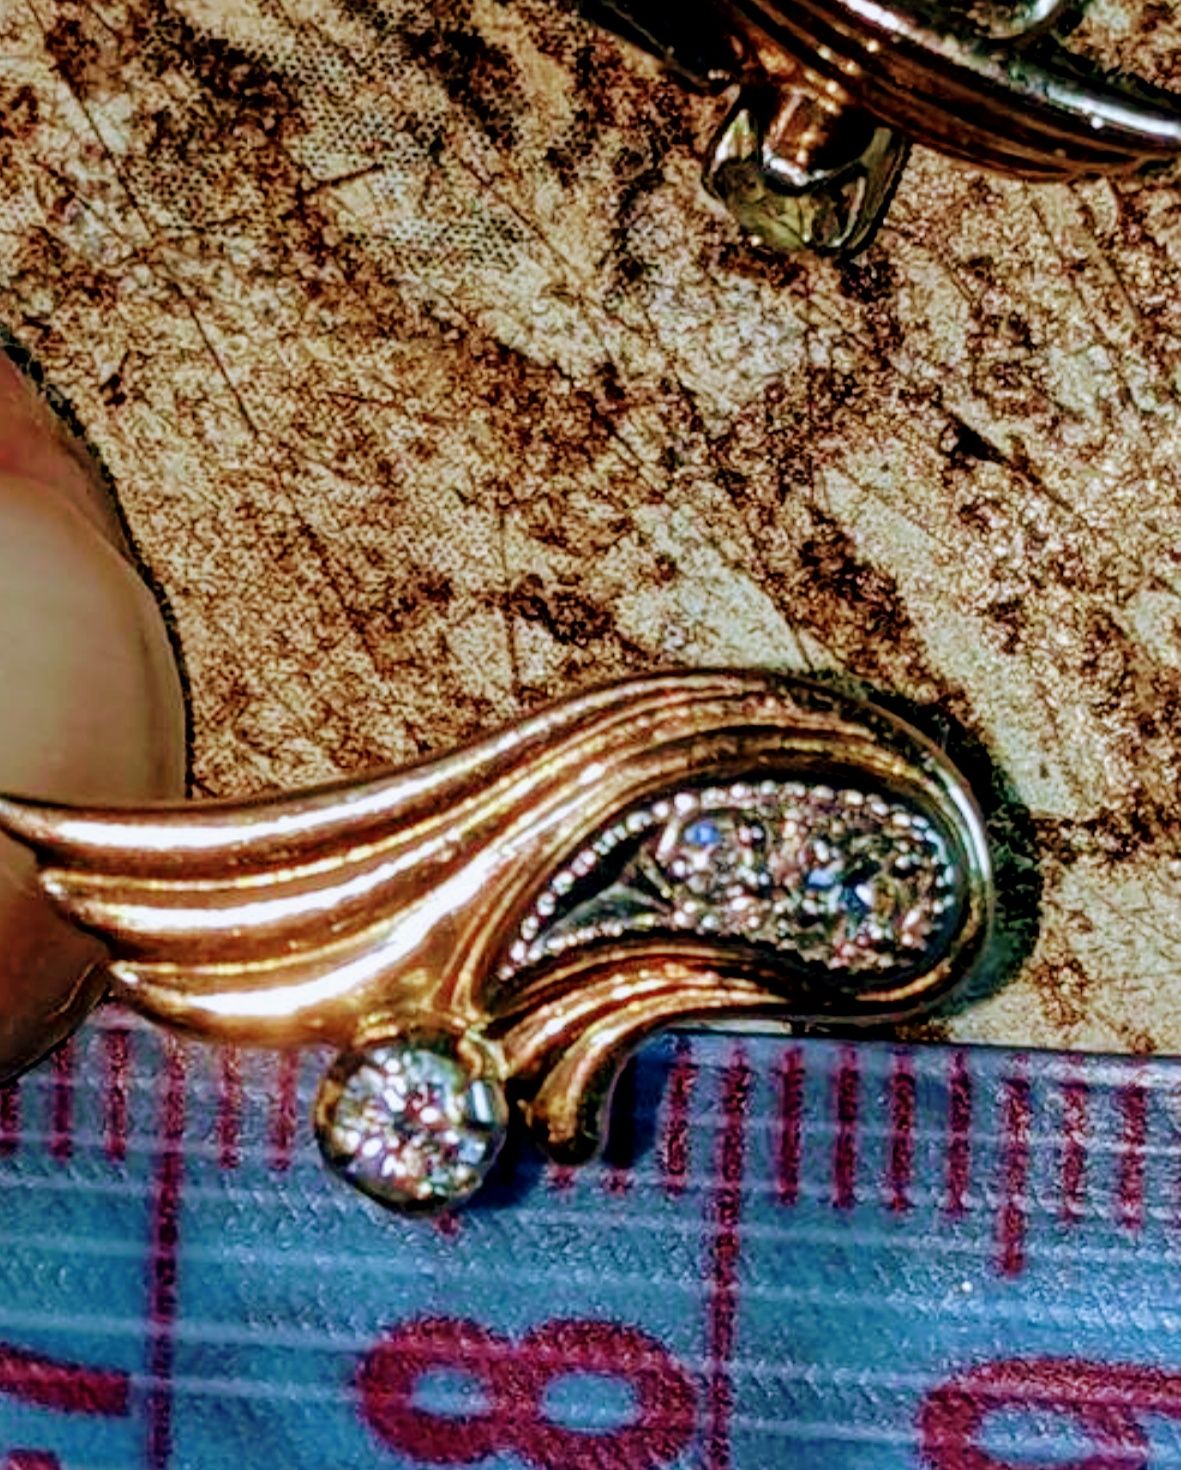 Серьги,кольца с бриллиантами